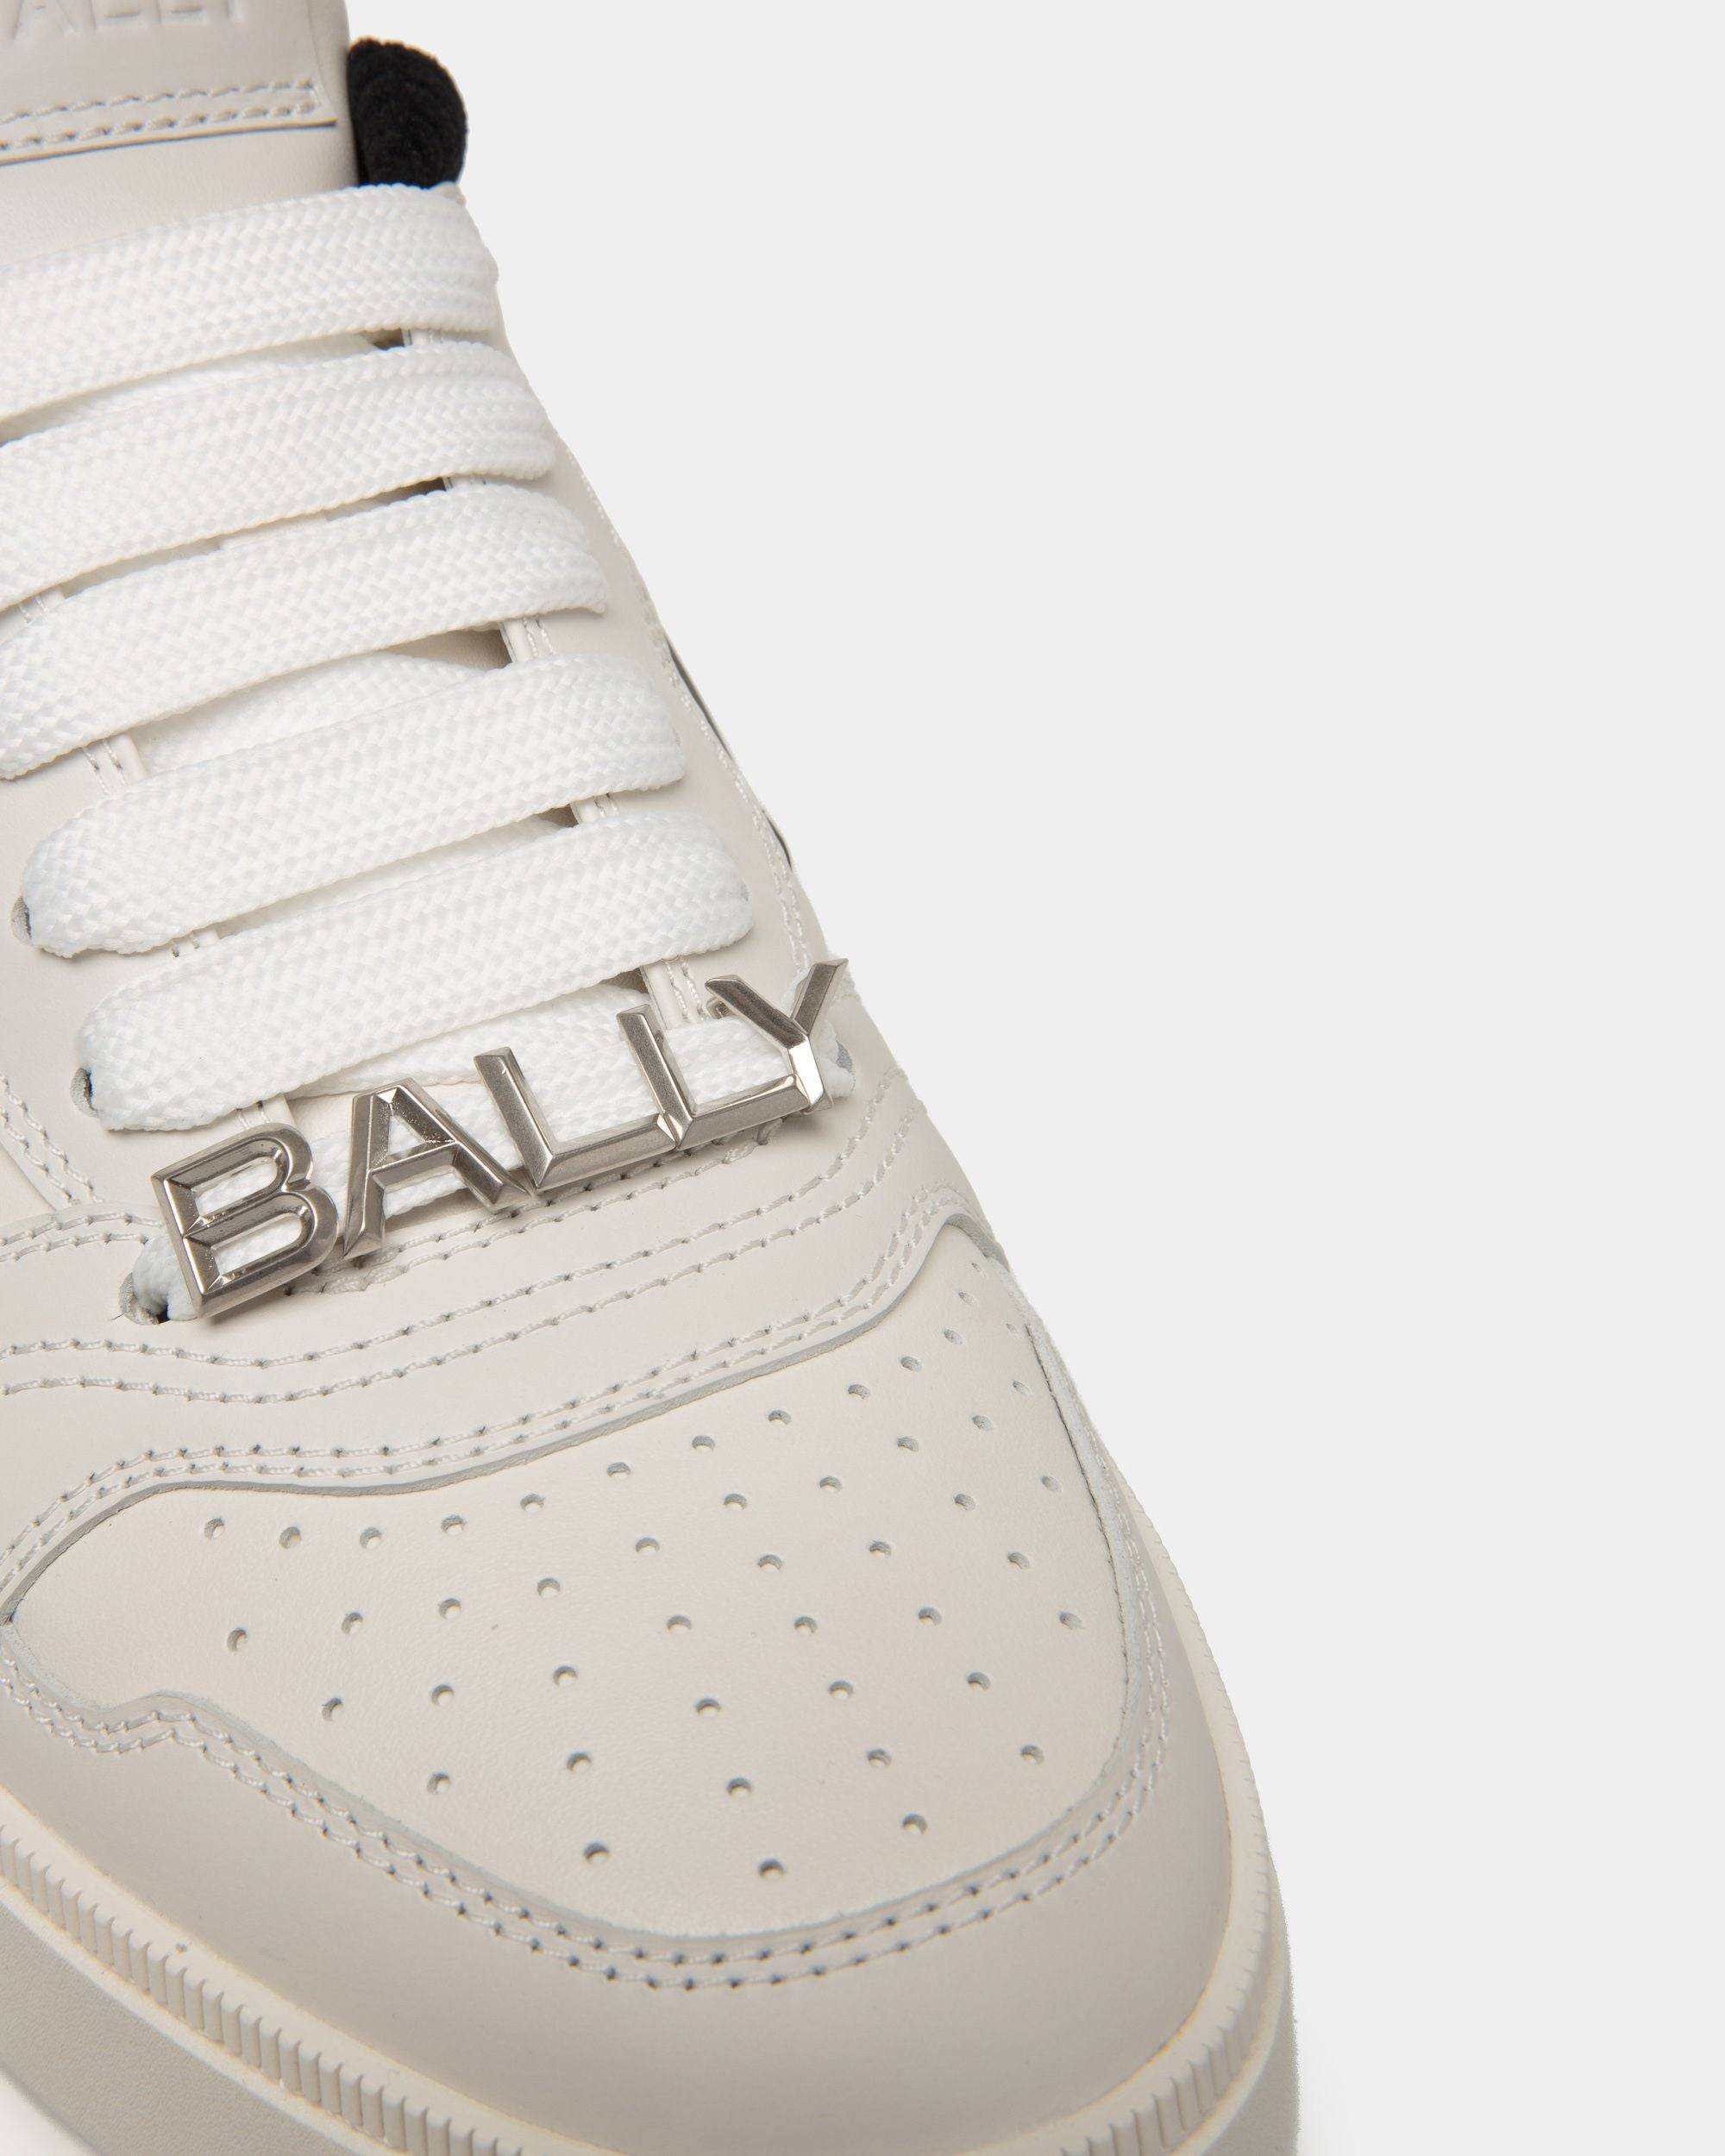 Raise | Herren-Sneaker aus Leder in Weiß | Bally | Still Life Detail